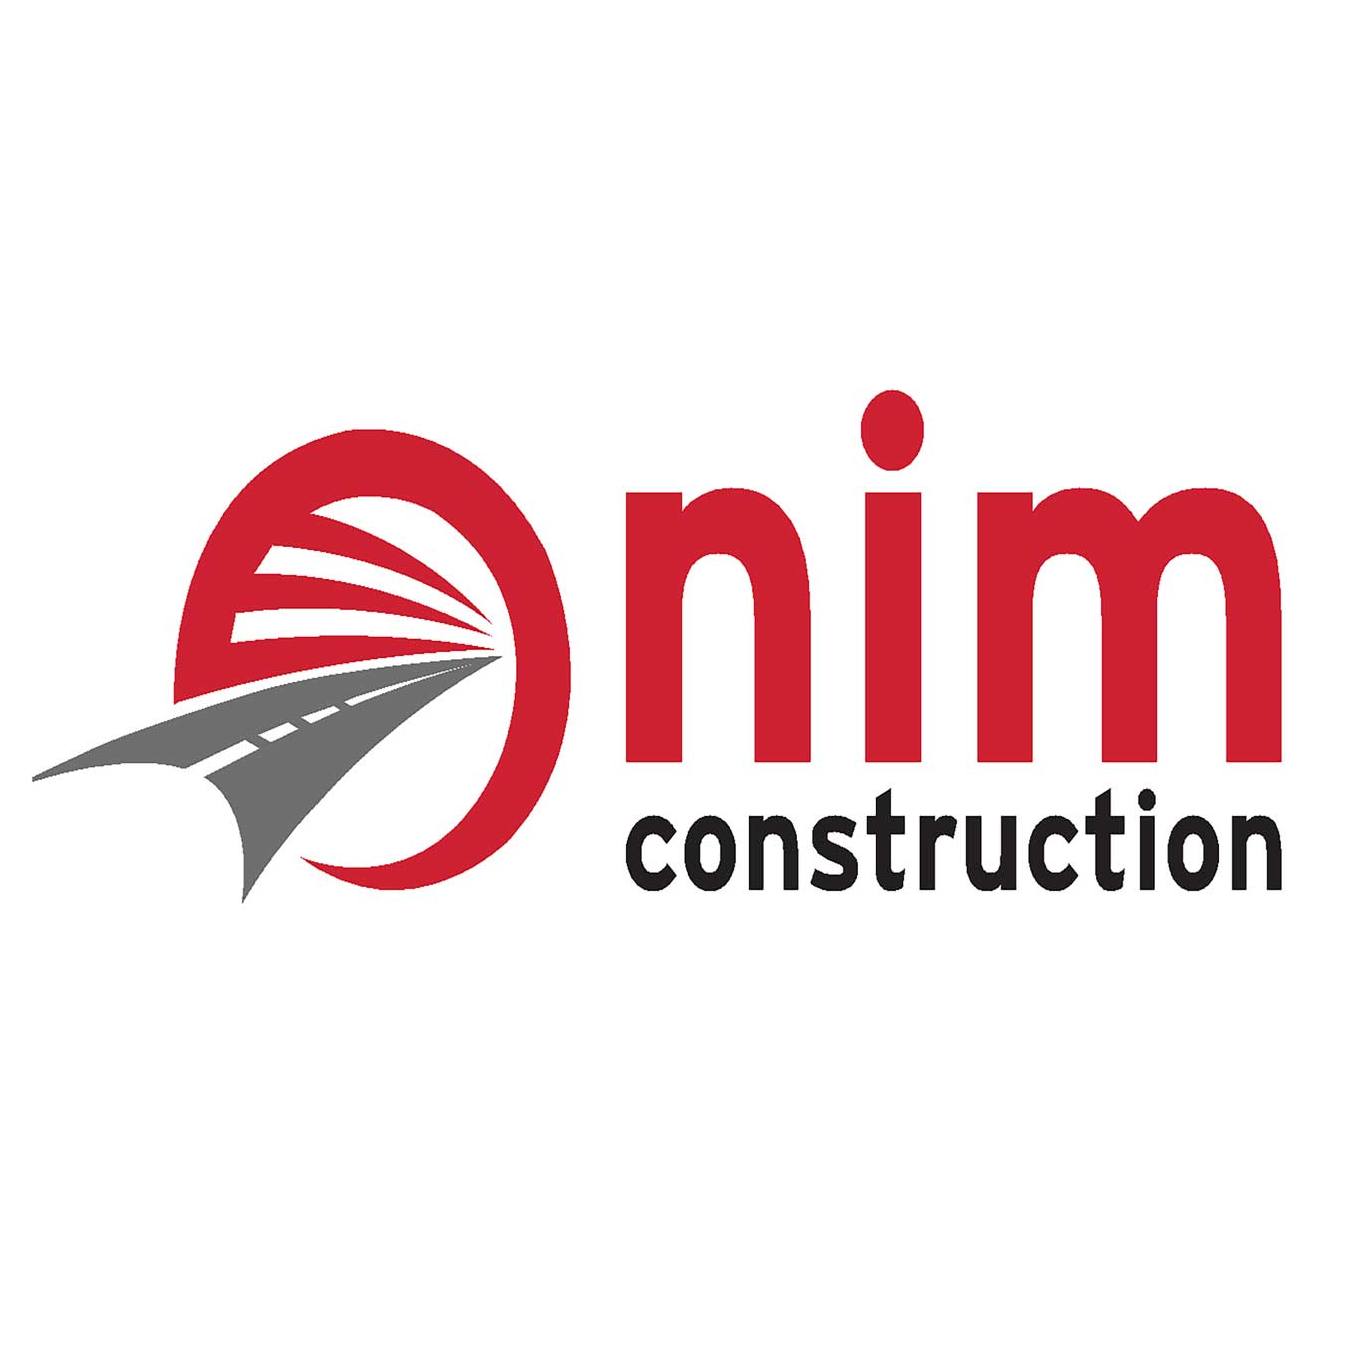 NIM Construction, Energy, and External Trade